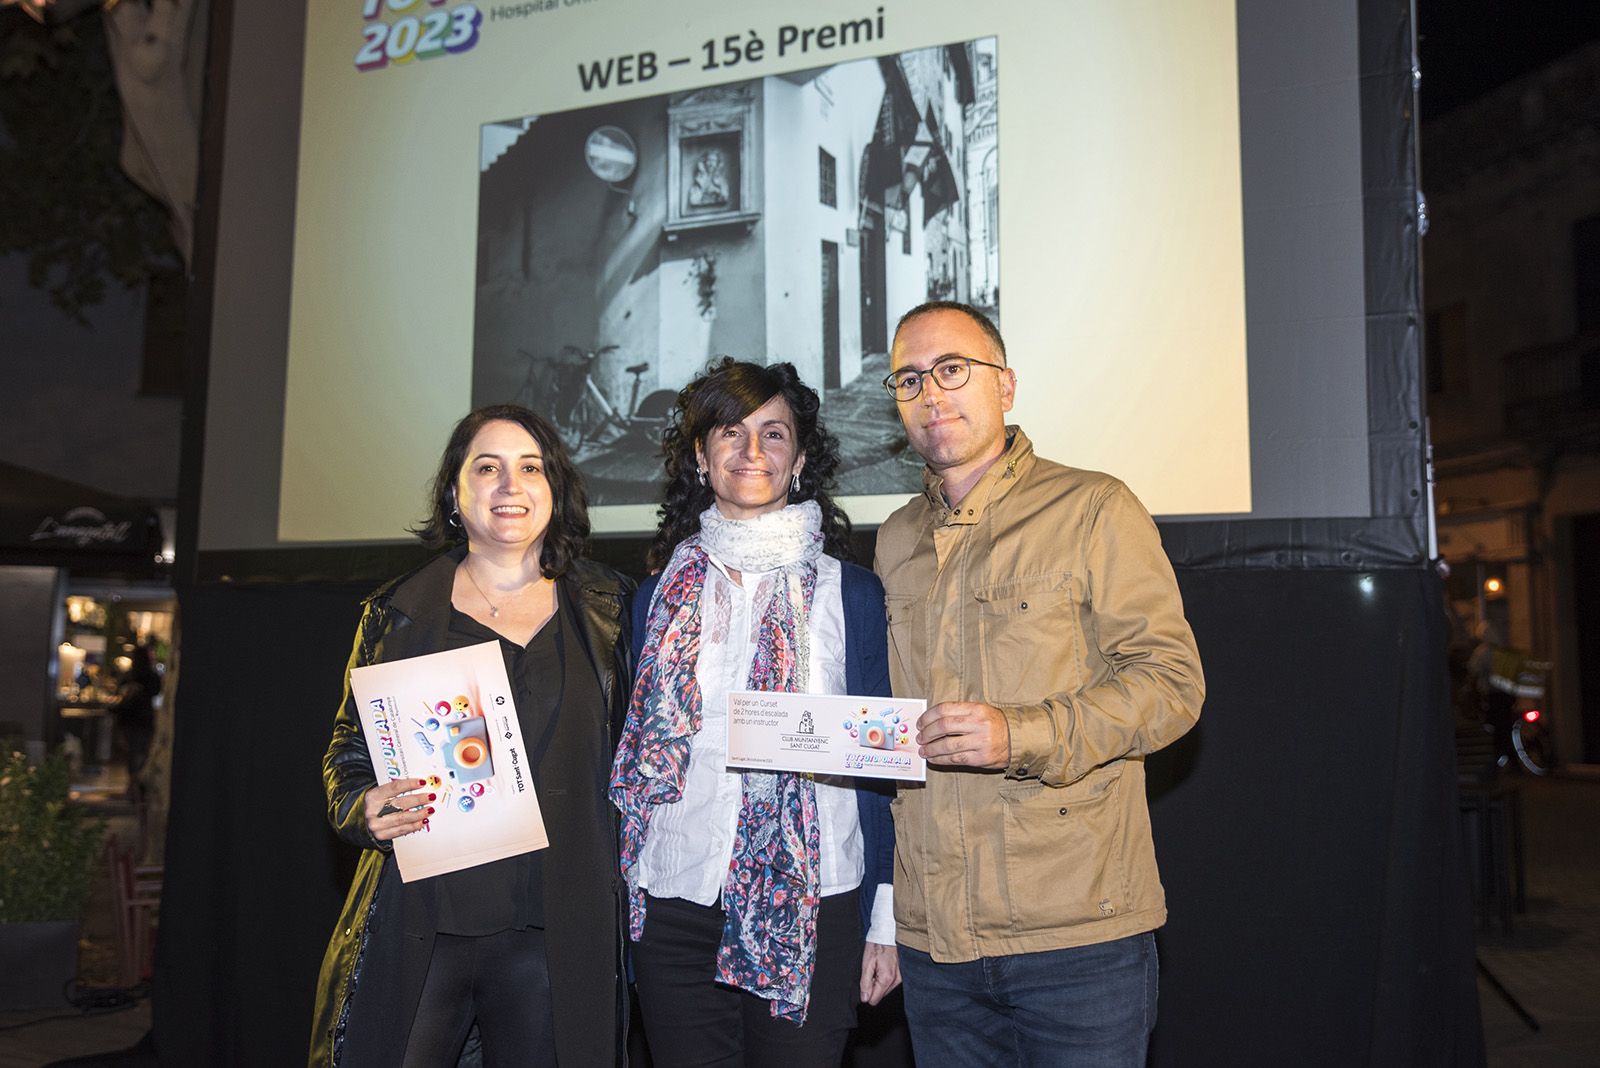 15è premi categoria web: Descans a la italiana · Florència (Itàlia) de Natàlia Quintana Fernández. FOTO: Bernat Millet.